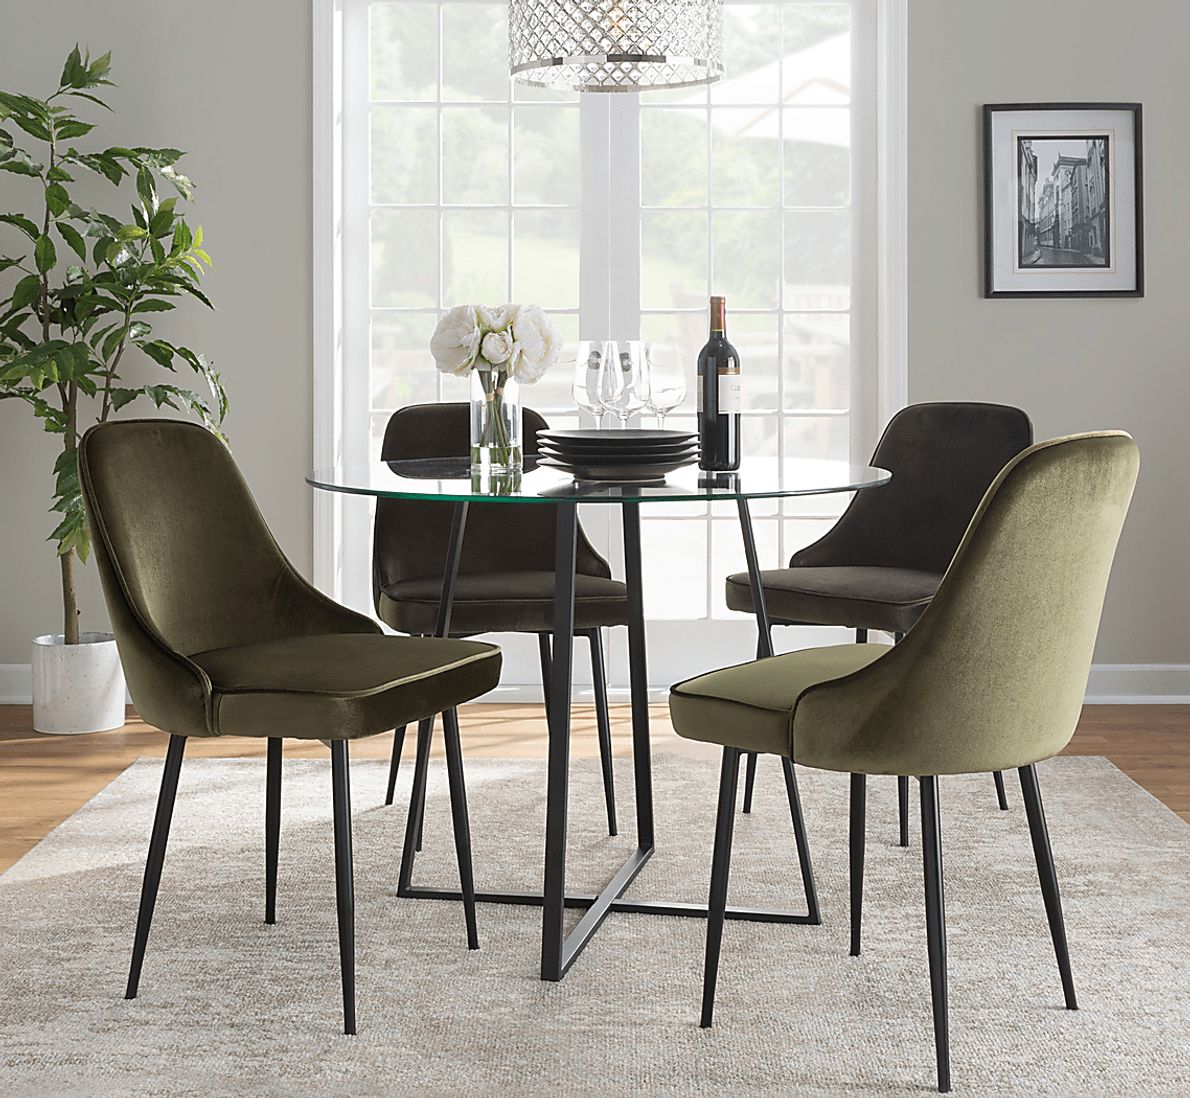 Clovis III Green Dining Chair, Set of 2